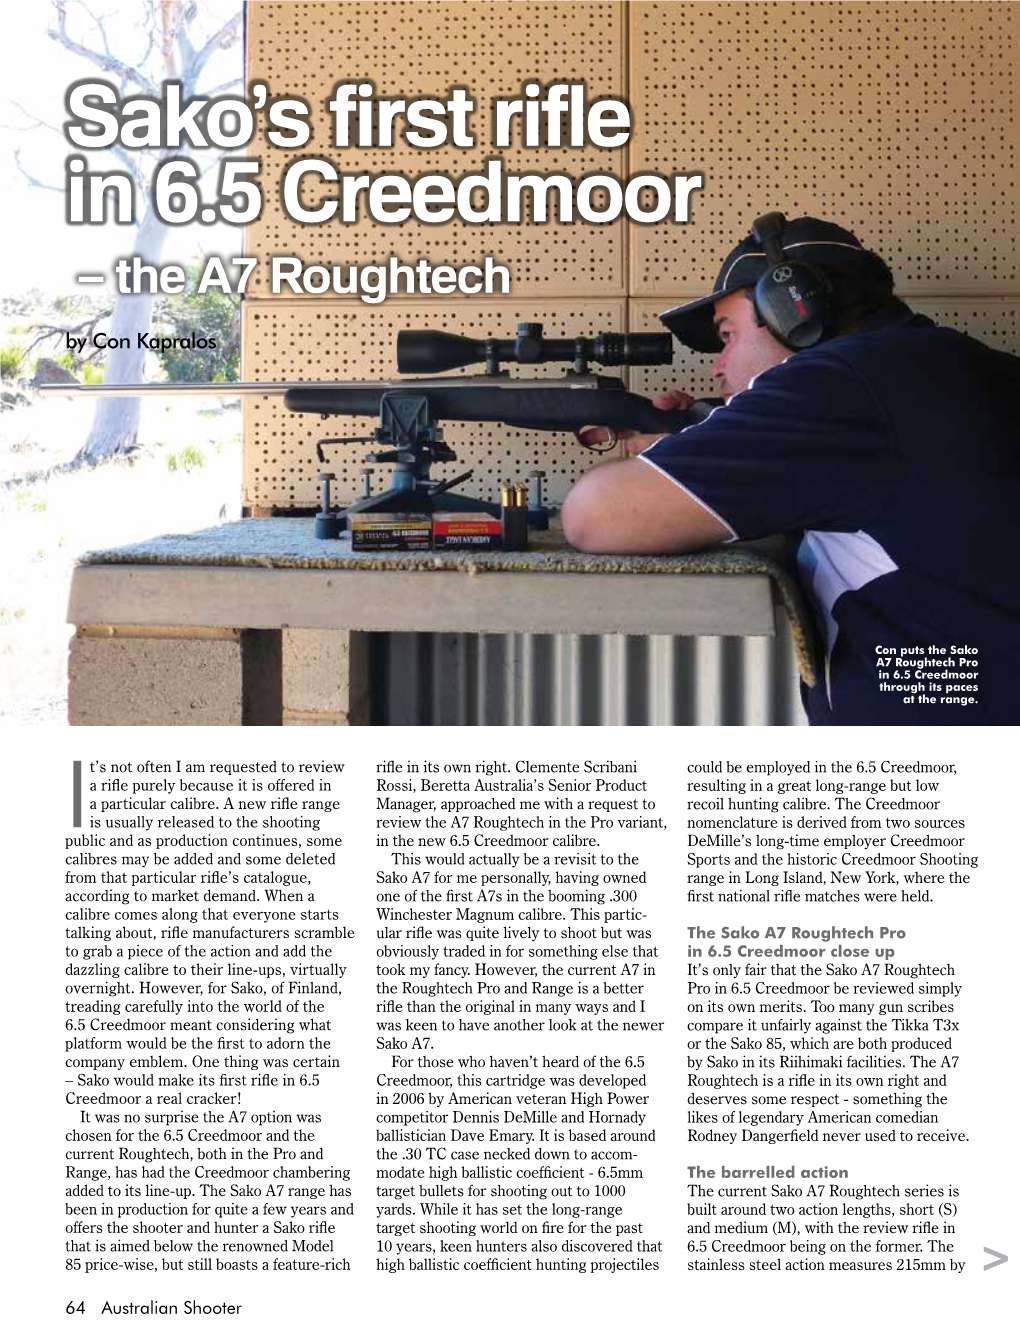 Sako's First Rifle in 6.5 Creedmoor